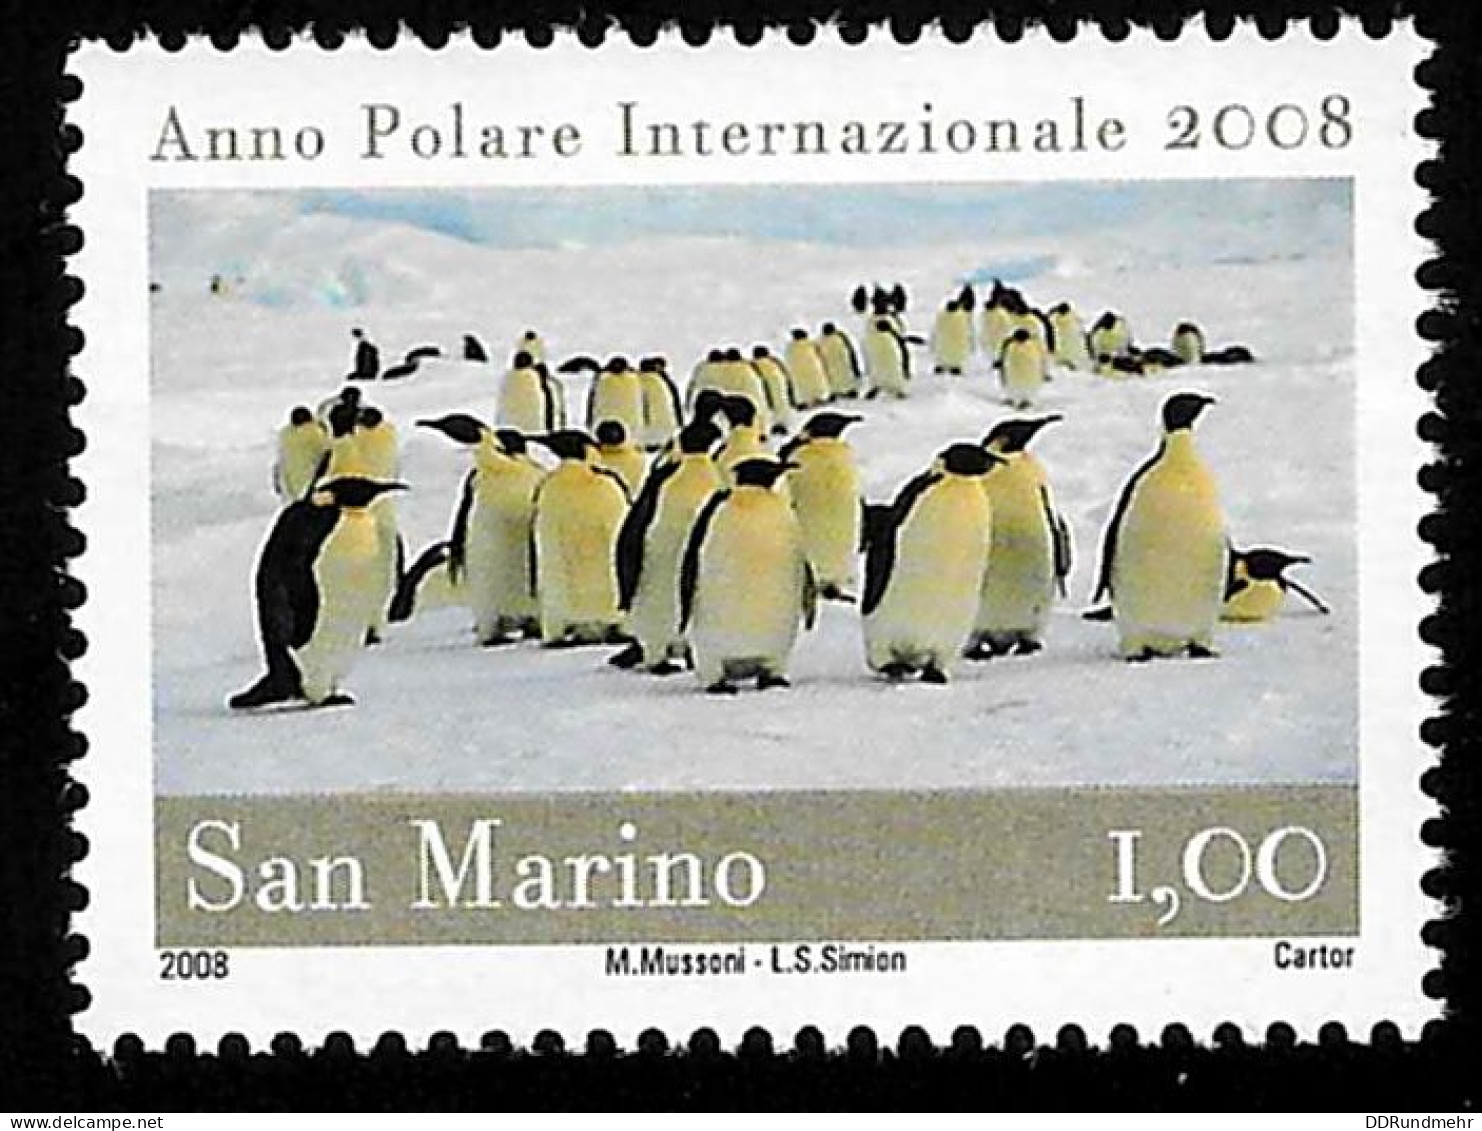 2008 Polar Year Michel SM 2359 Stamp Number SM 1769 Yvert Et Tellier SM 2152 Stanley Gibbons SM 2185 Xx MNH - Neufs